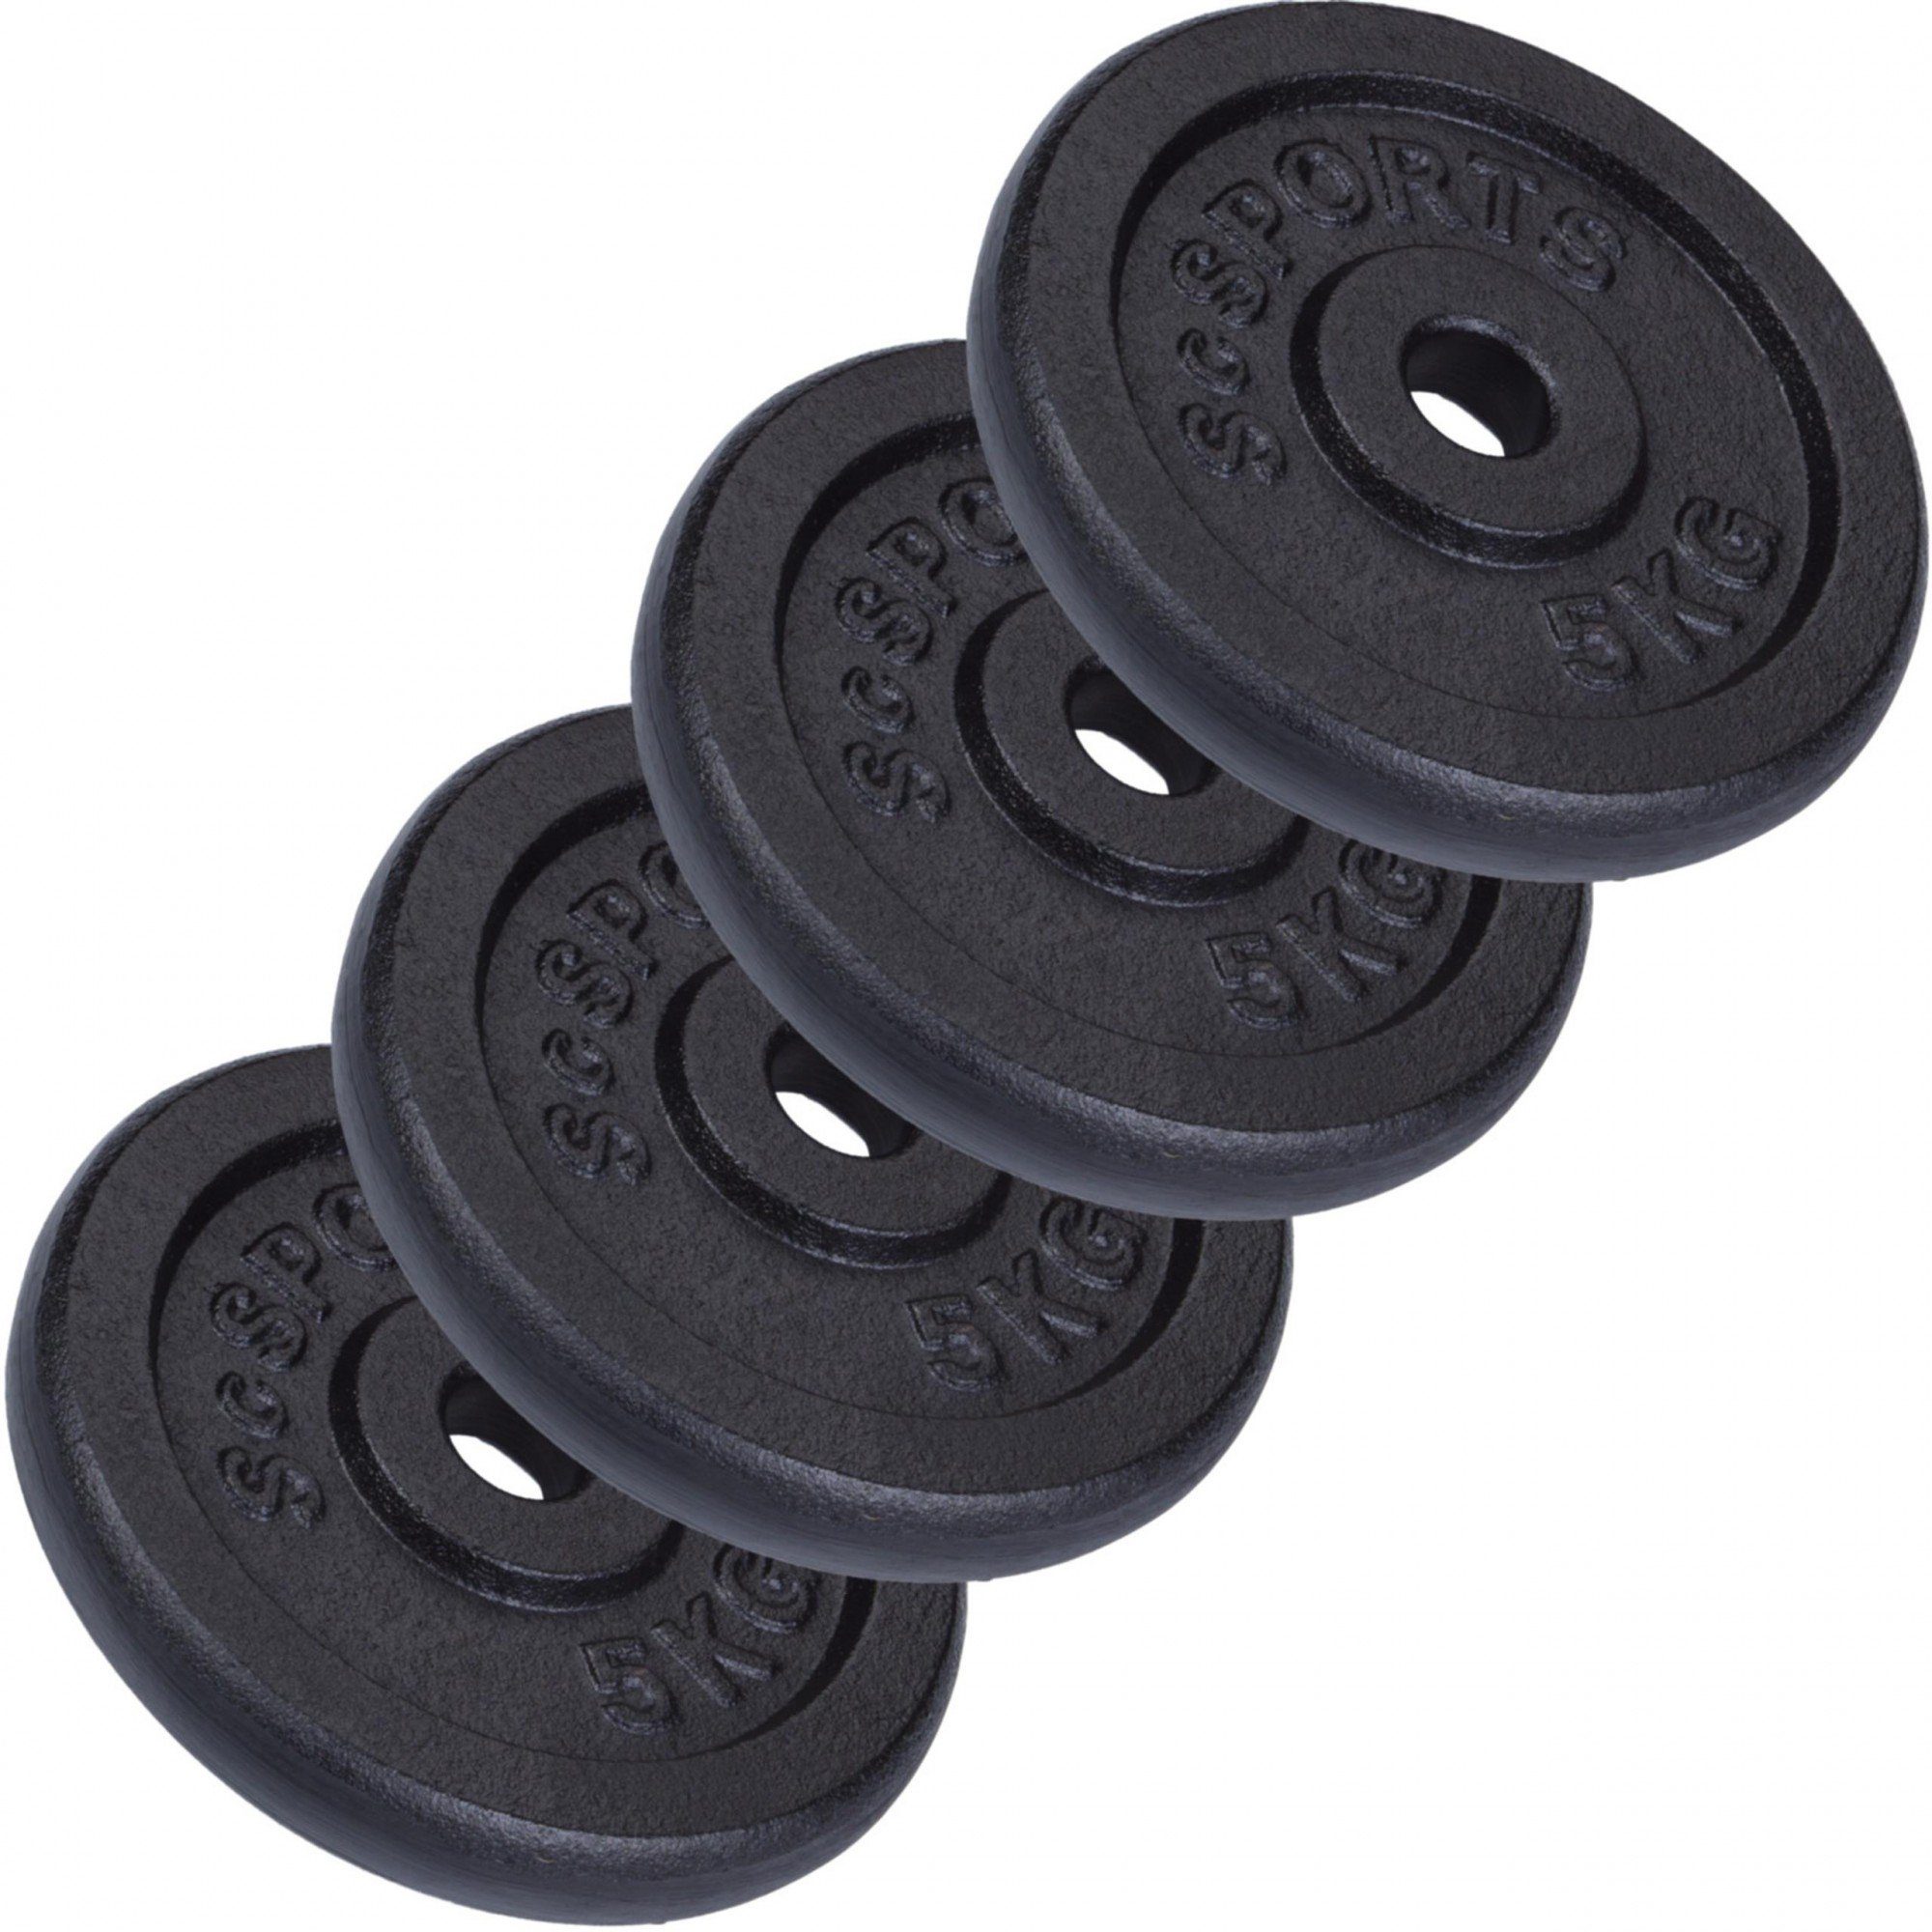 Westside Discs Hantel-Set 34,5kg Curlset Gusseisen Gewichte 120 SZ 30mm Curlstange cm